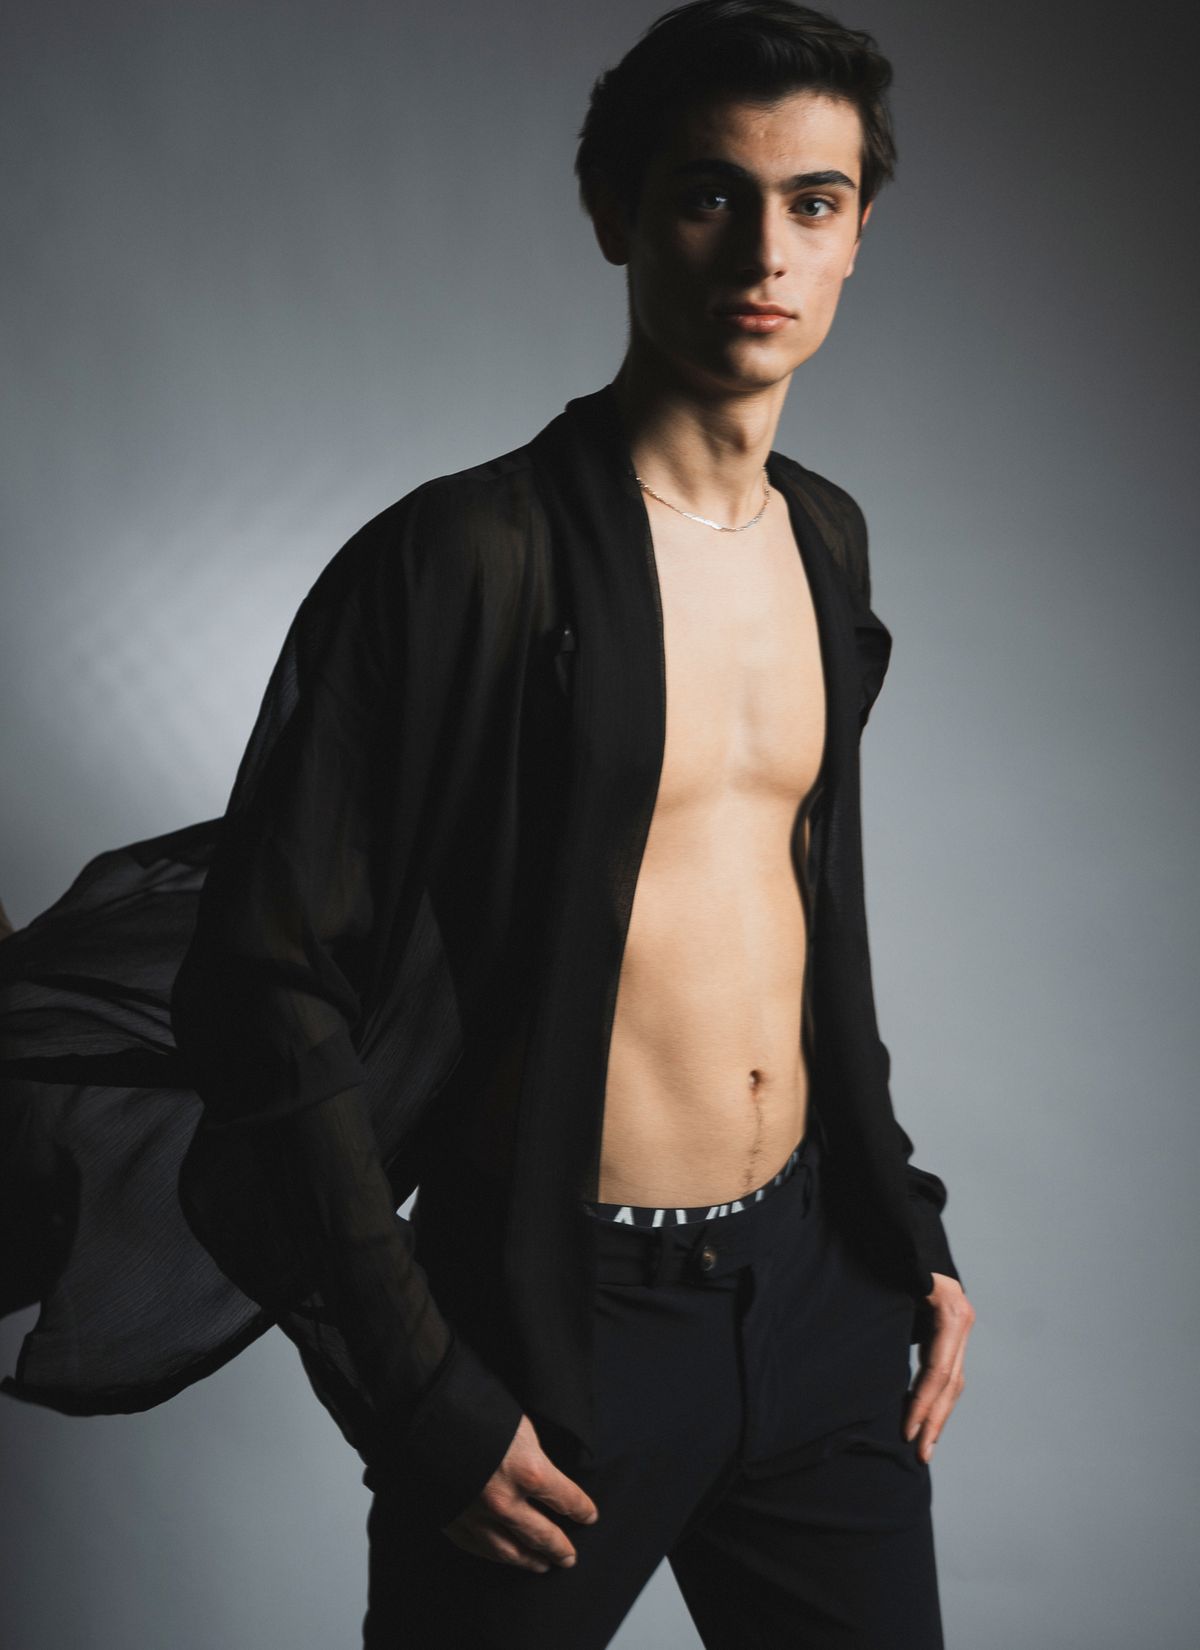 Model Ricky Pasin